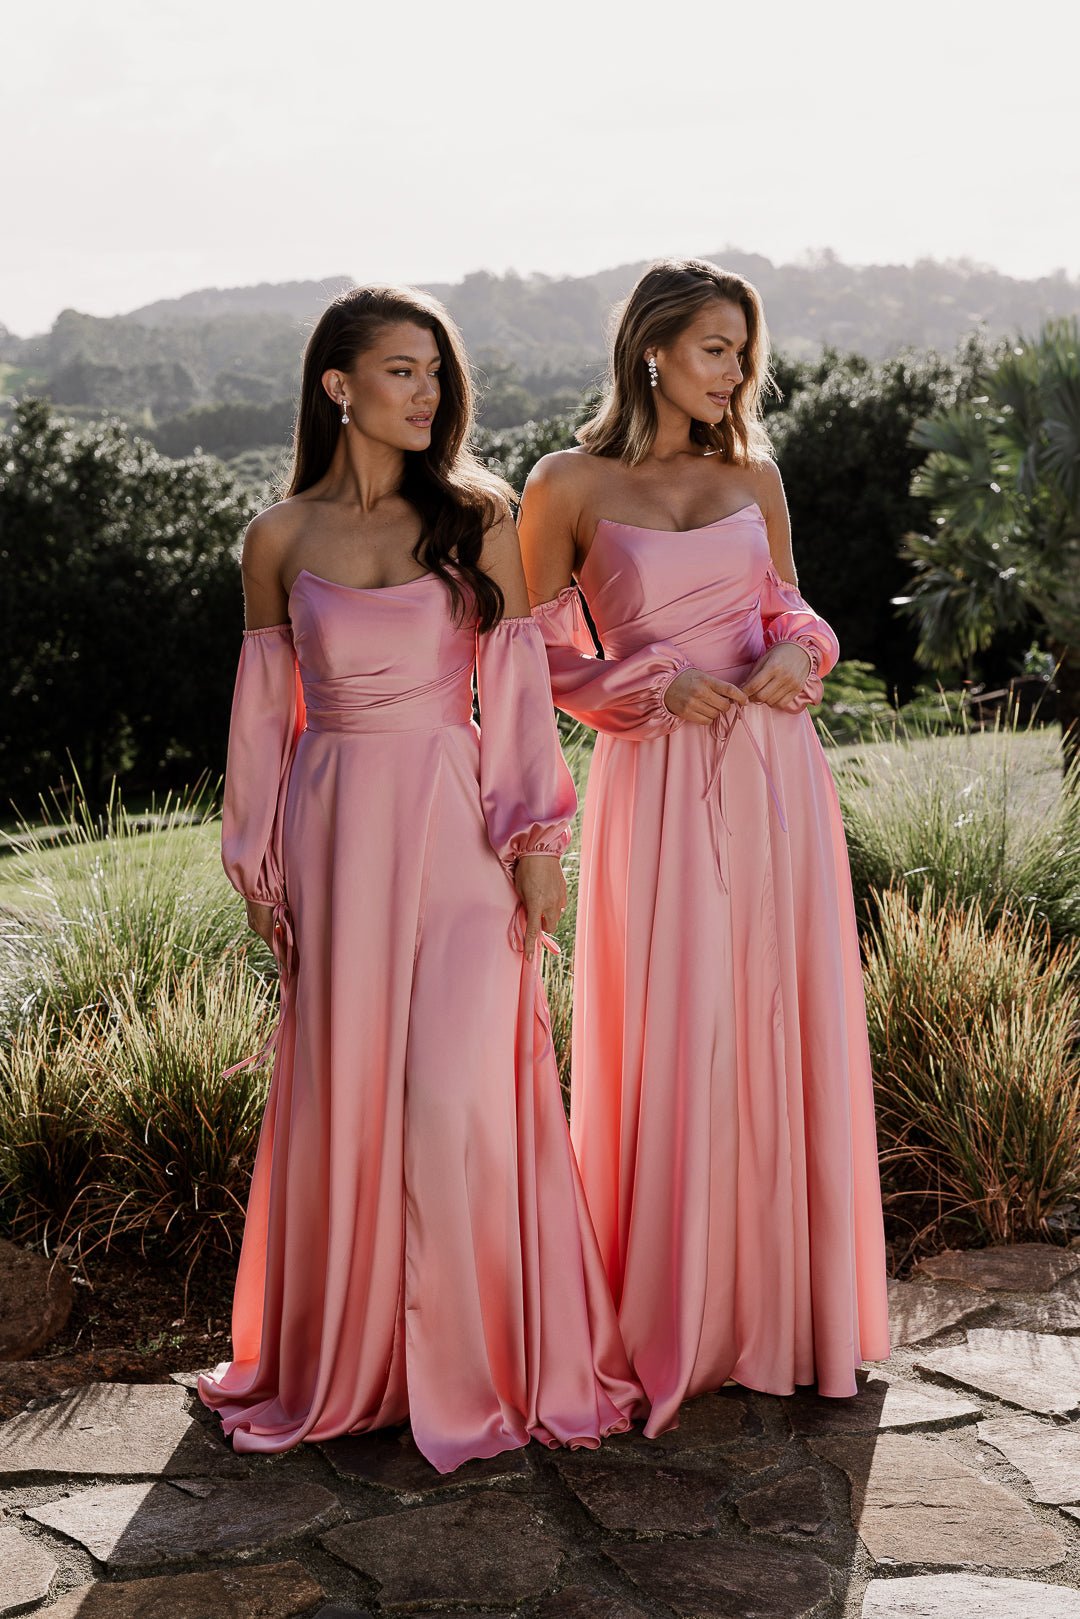 Violette Dress by Tania Olsen Sizes 18 - 30 TO895 - ElissaJay Boutique